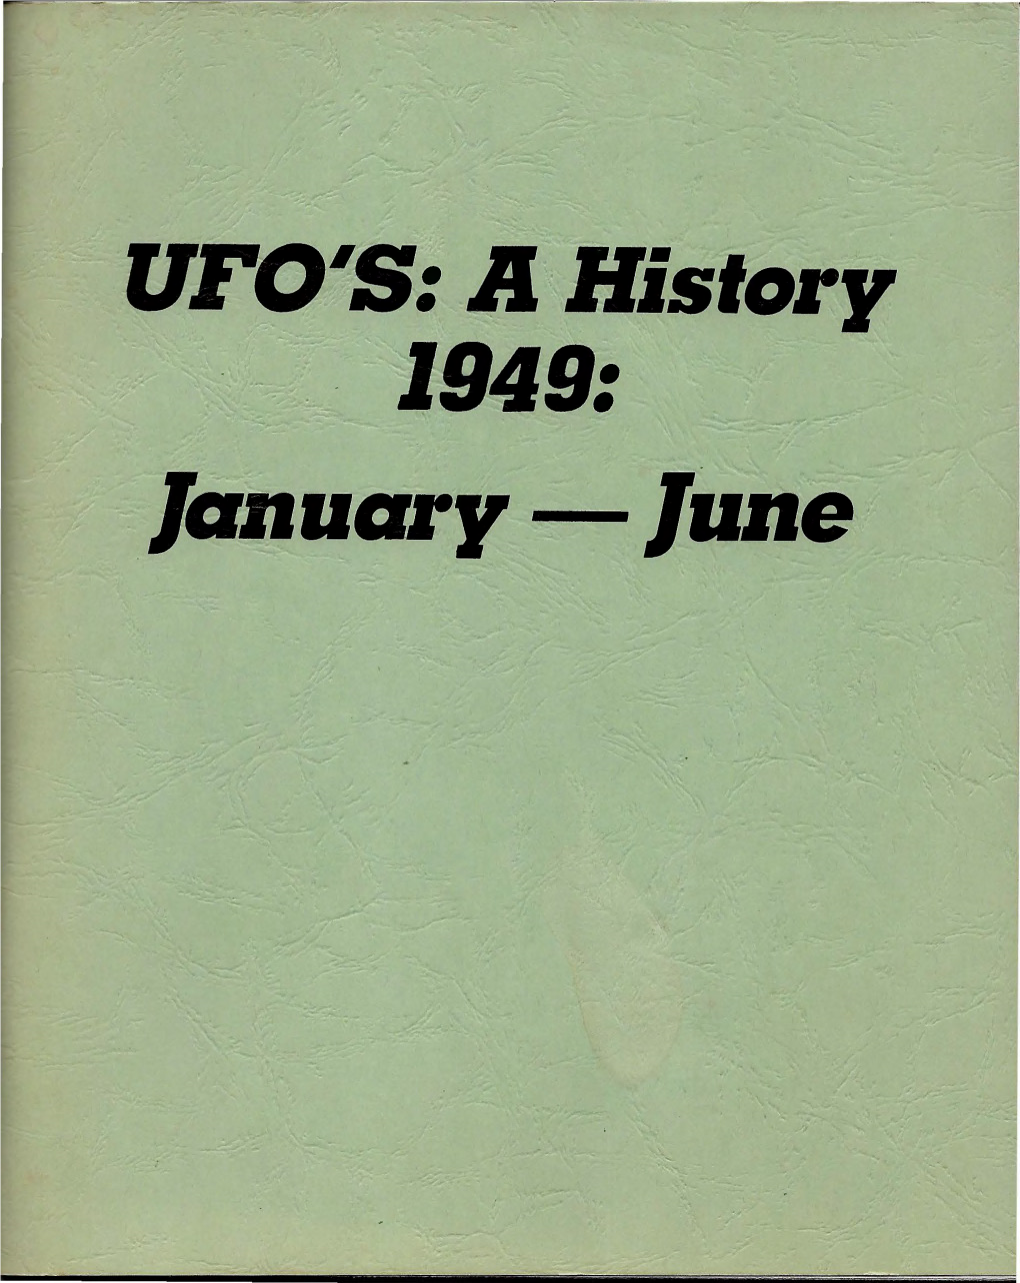 Ufos: a HISTORY